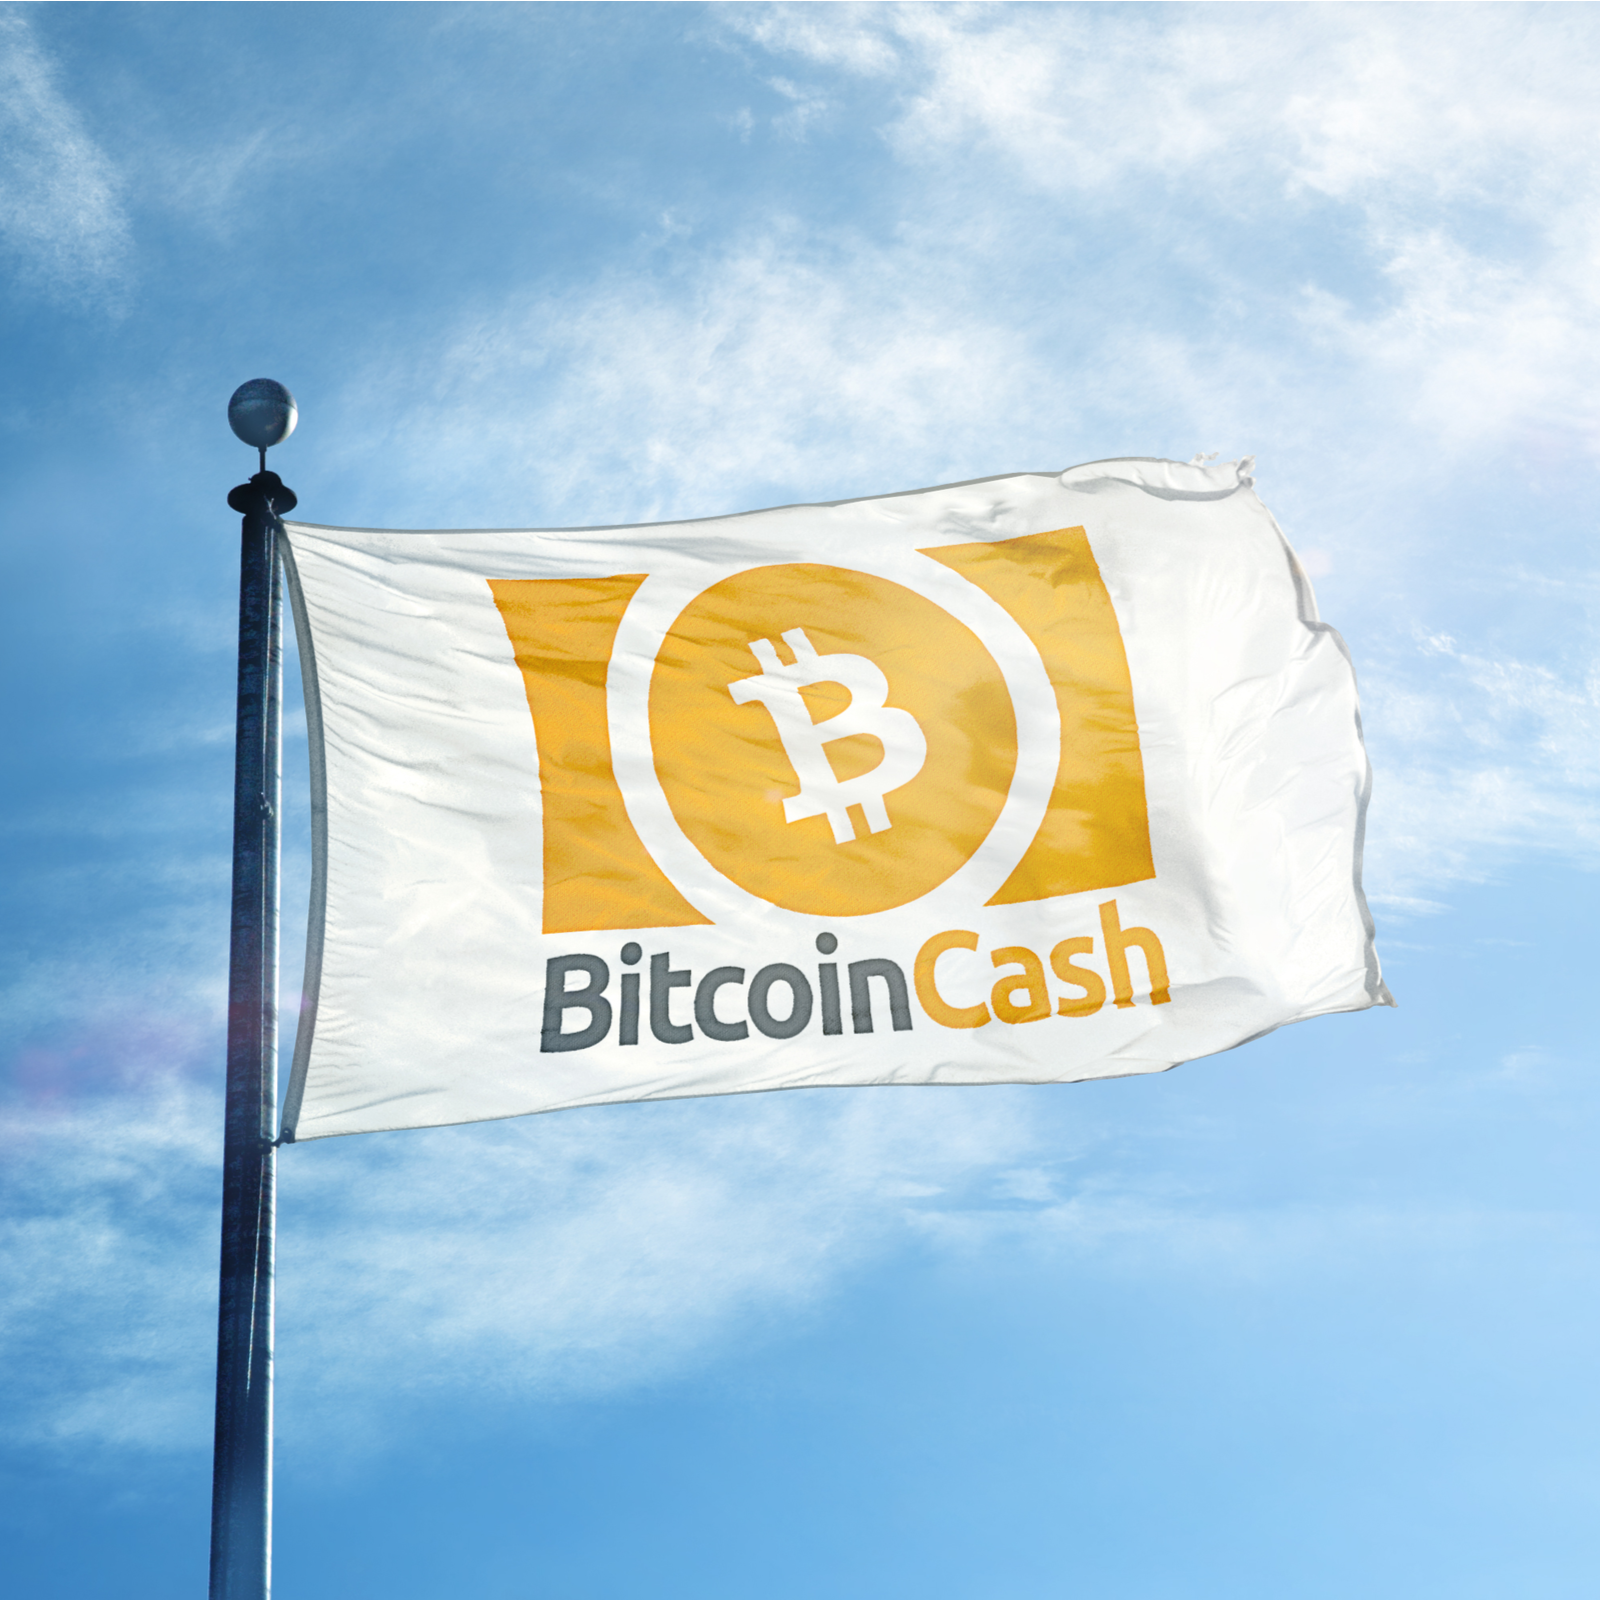 bitcoin cash to replace bitcoin